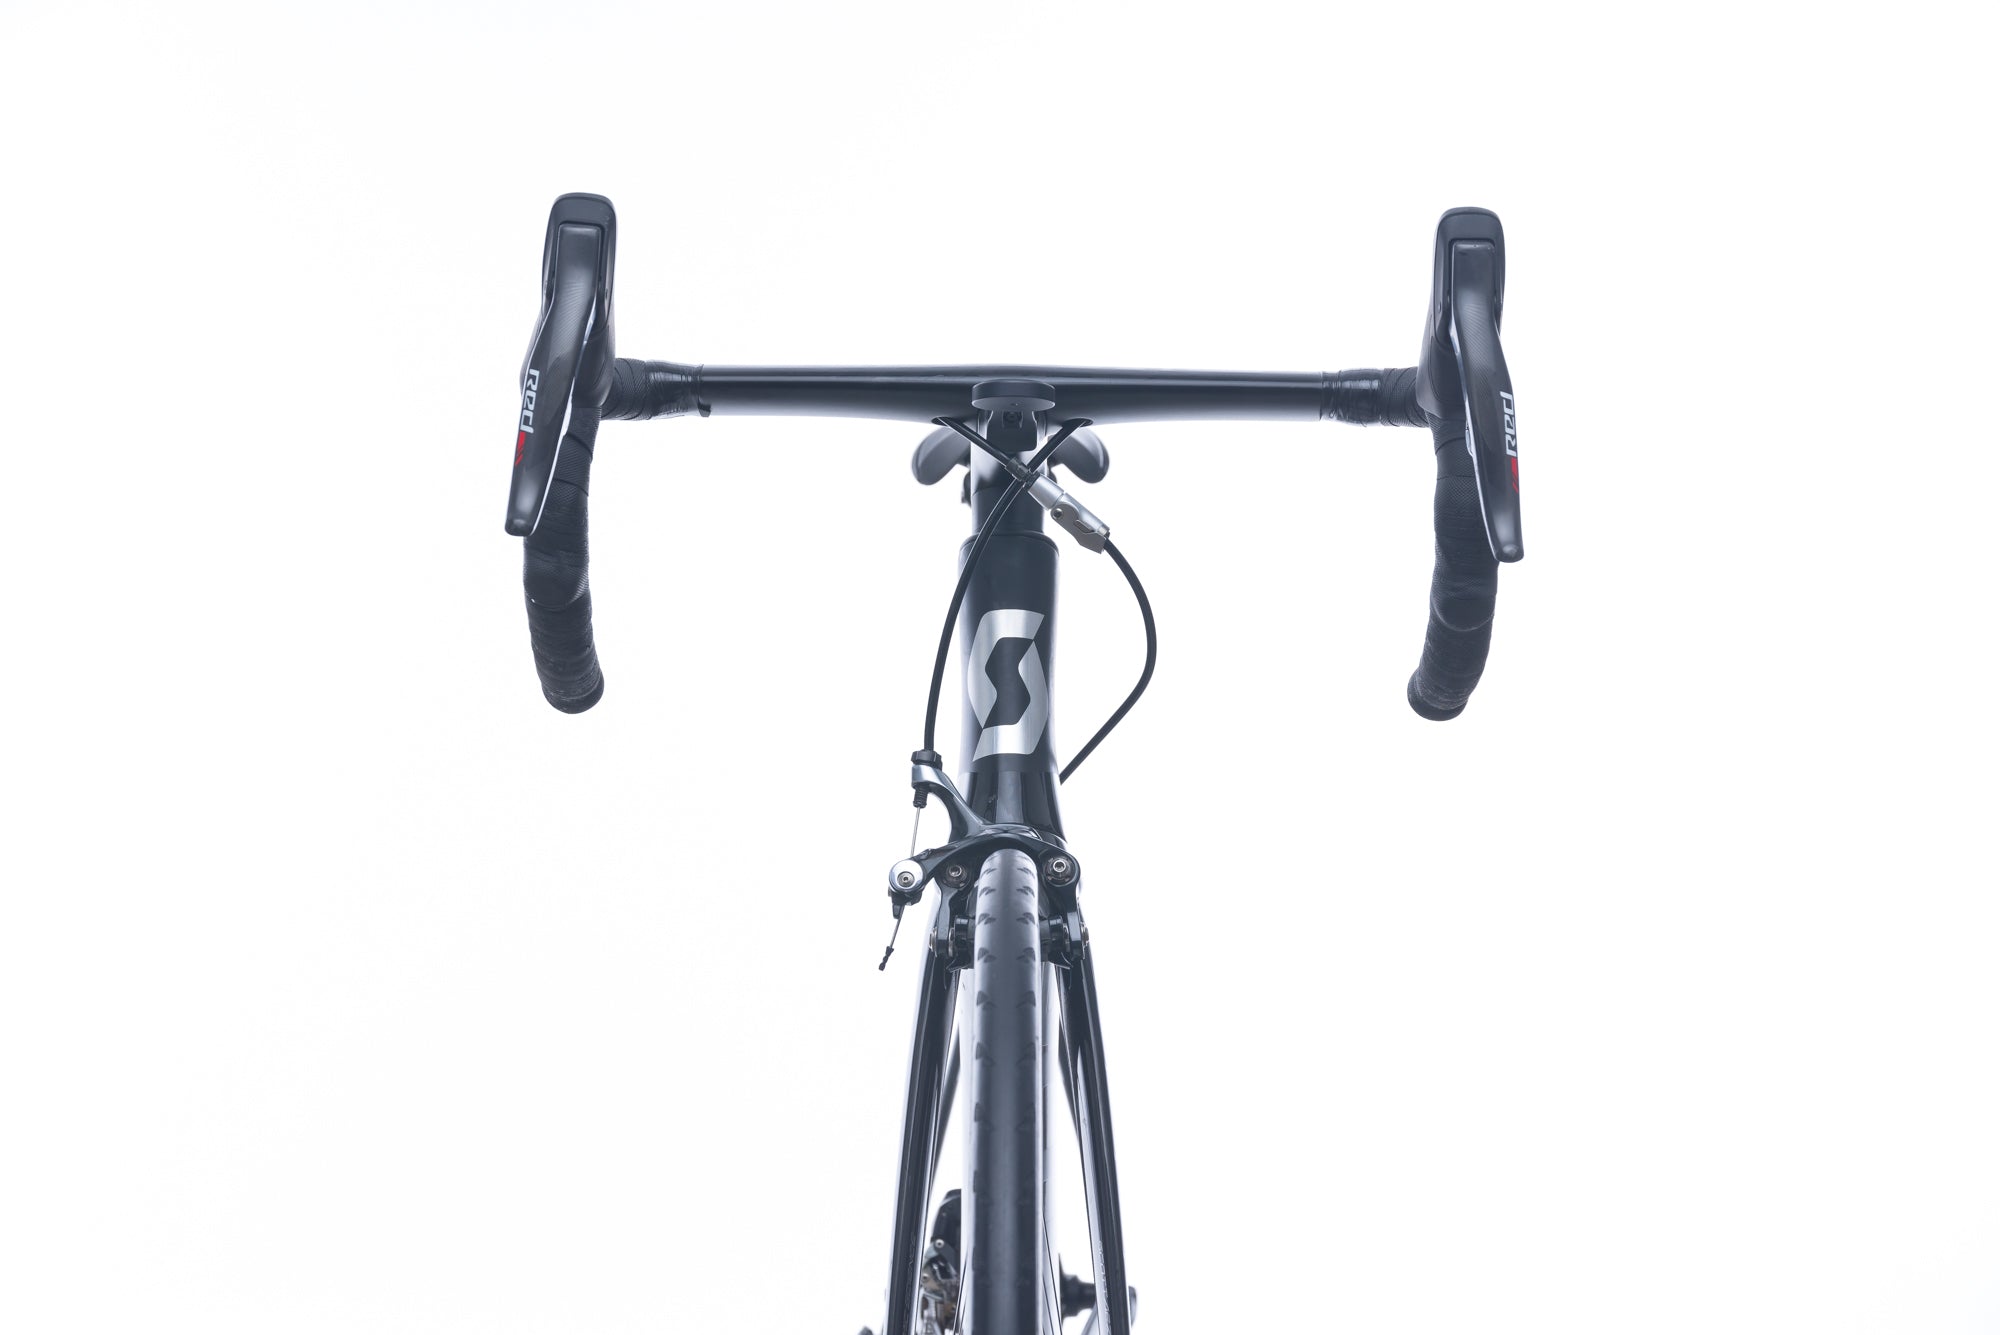 Scott Foil Premium 54cm Bike - 2017 crank